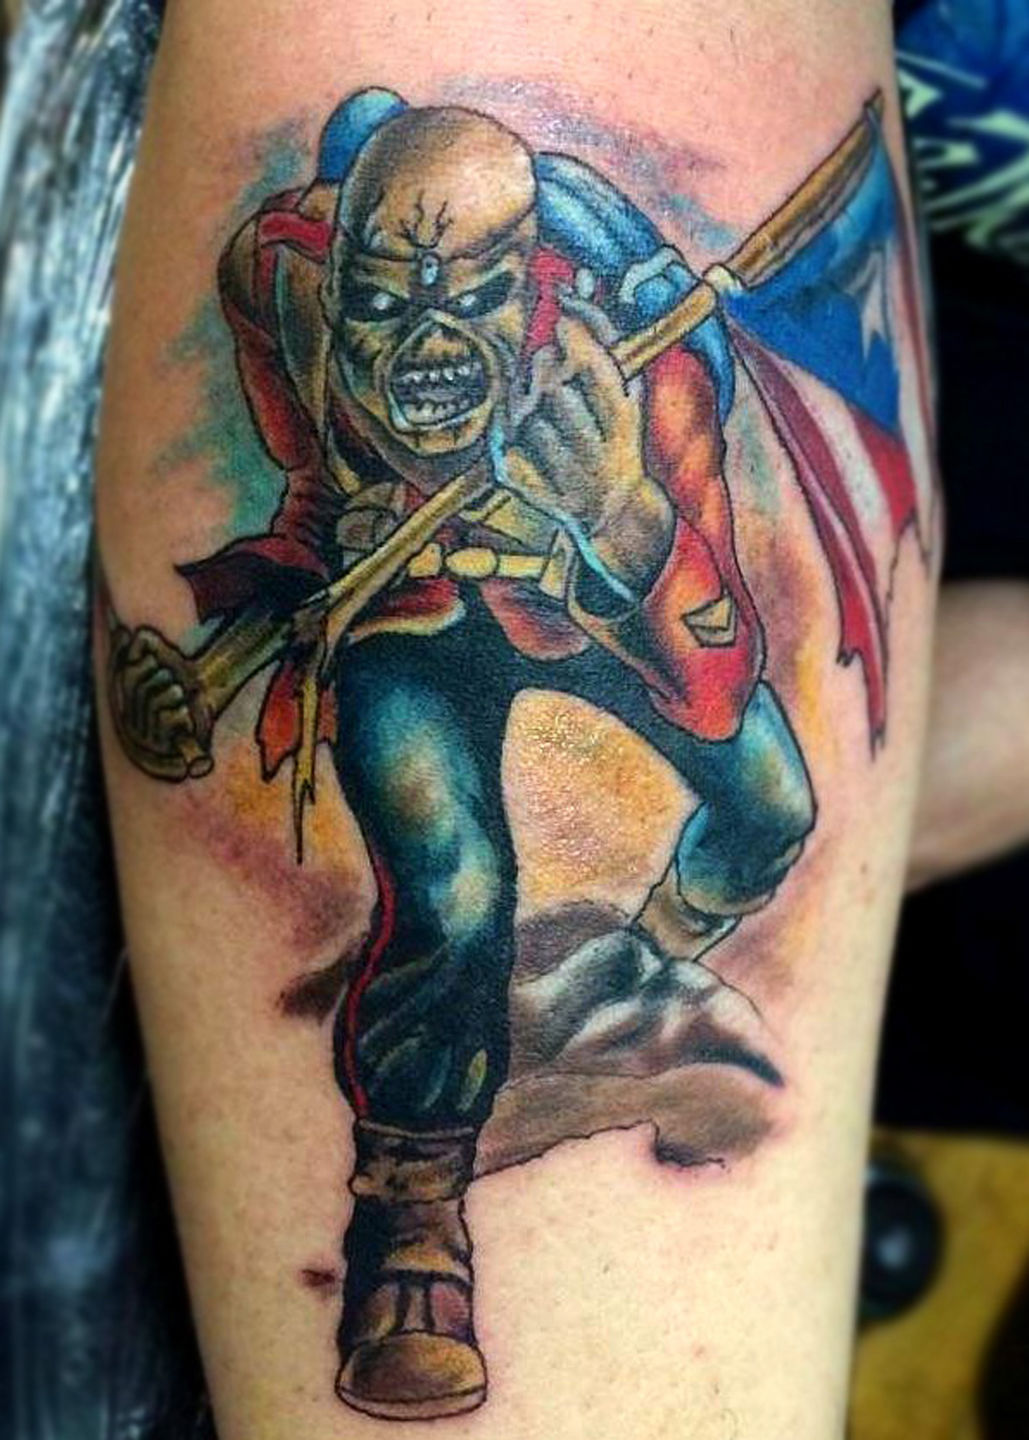 Realistic Iron Maiden Eddie tribute tattoo by Evan Olin  Tattoos